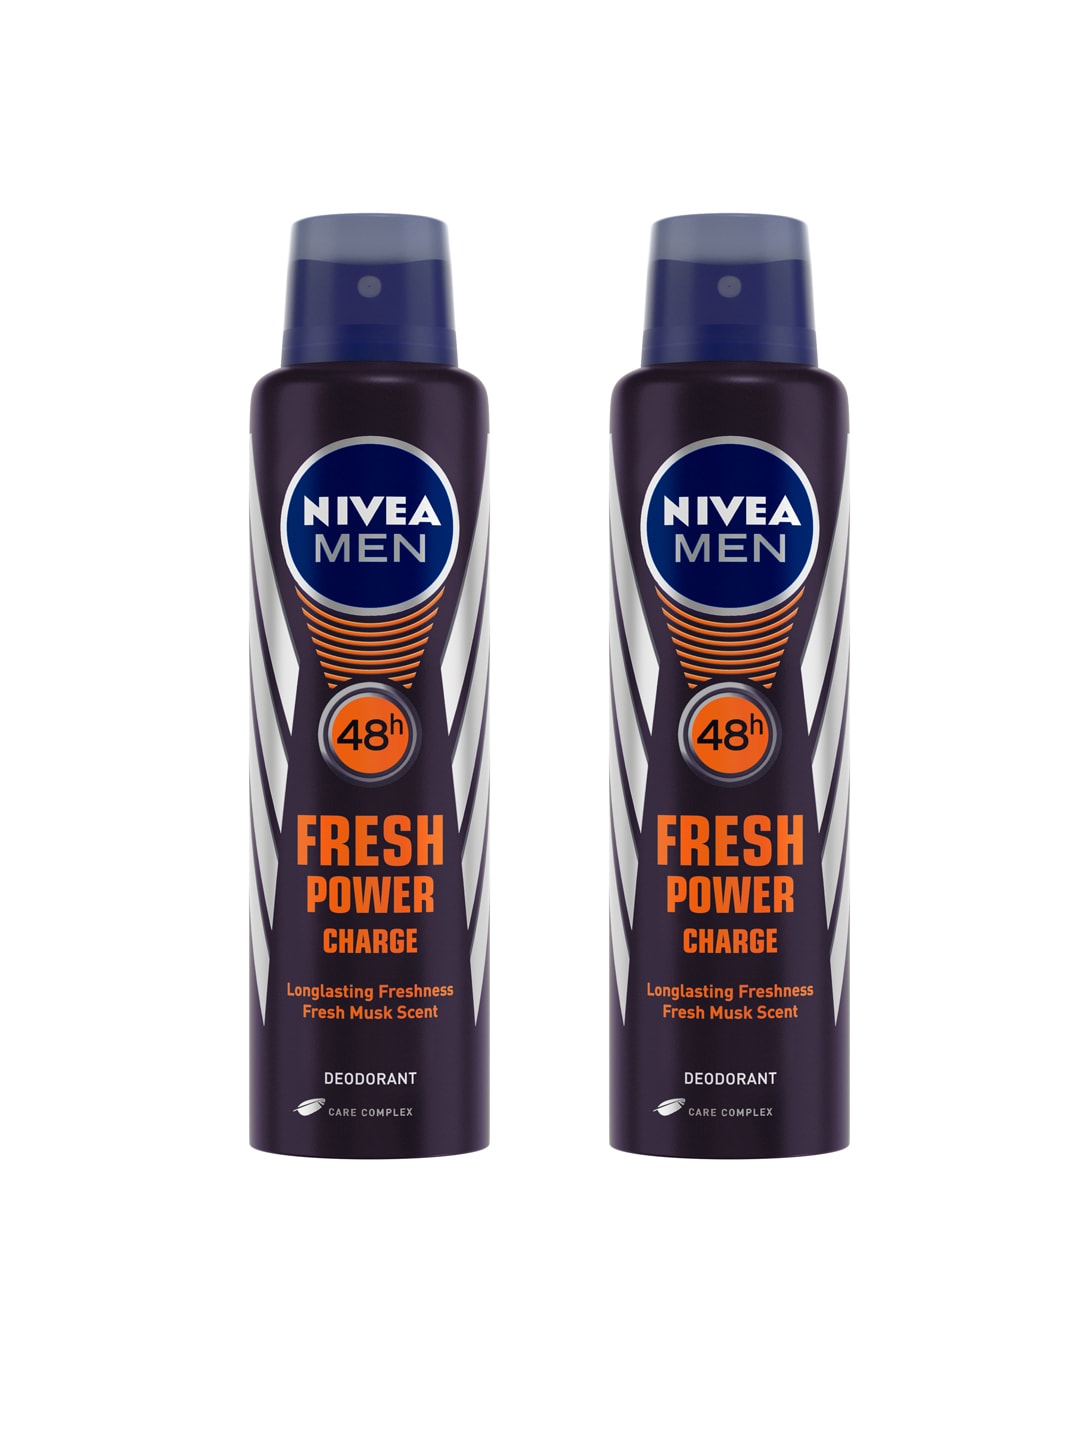 Nivea Men Pack of 2 Fresh Power Charge Deodorant